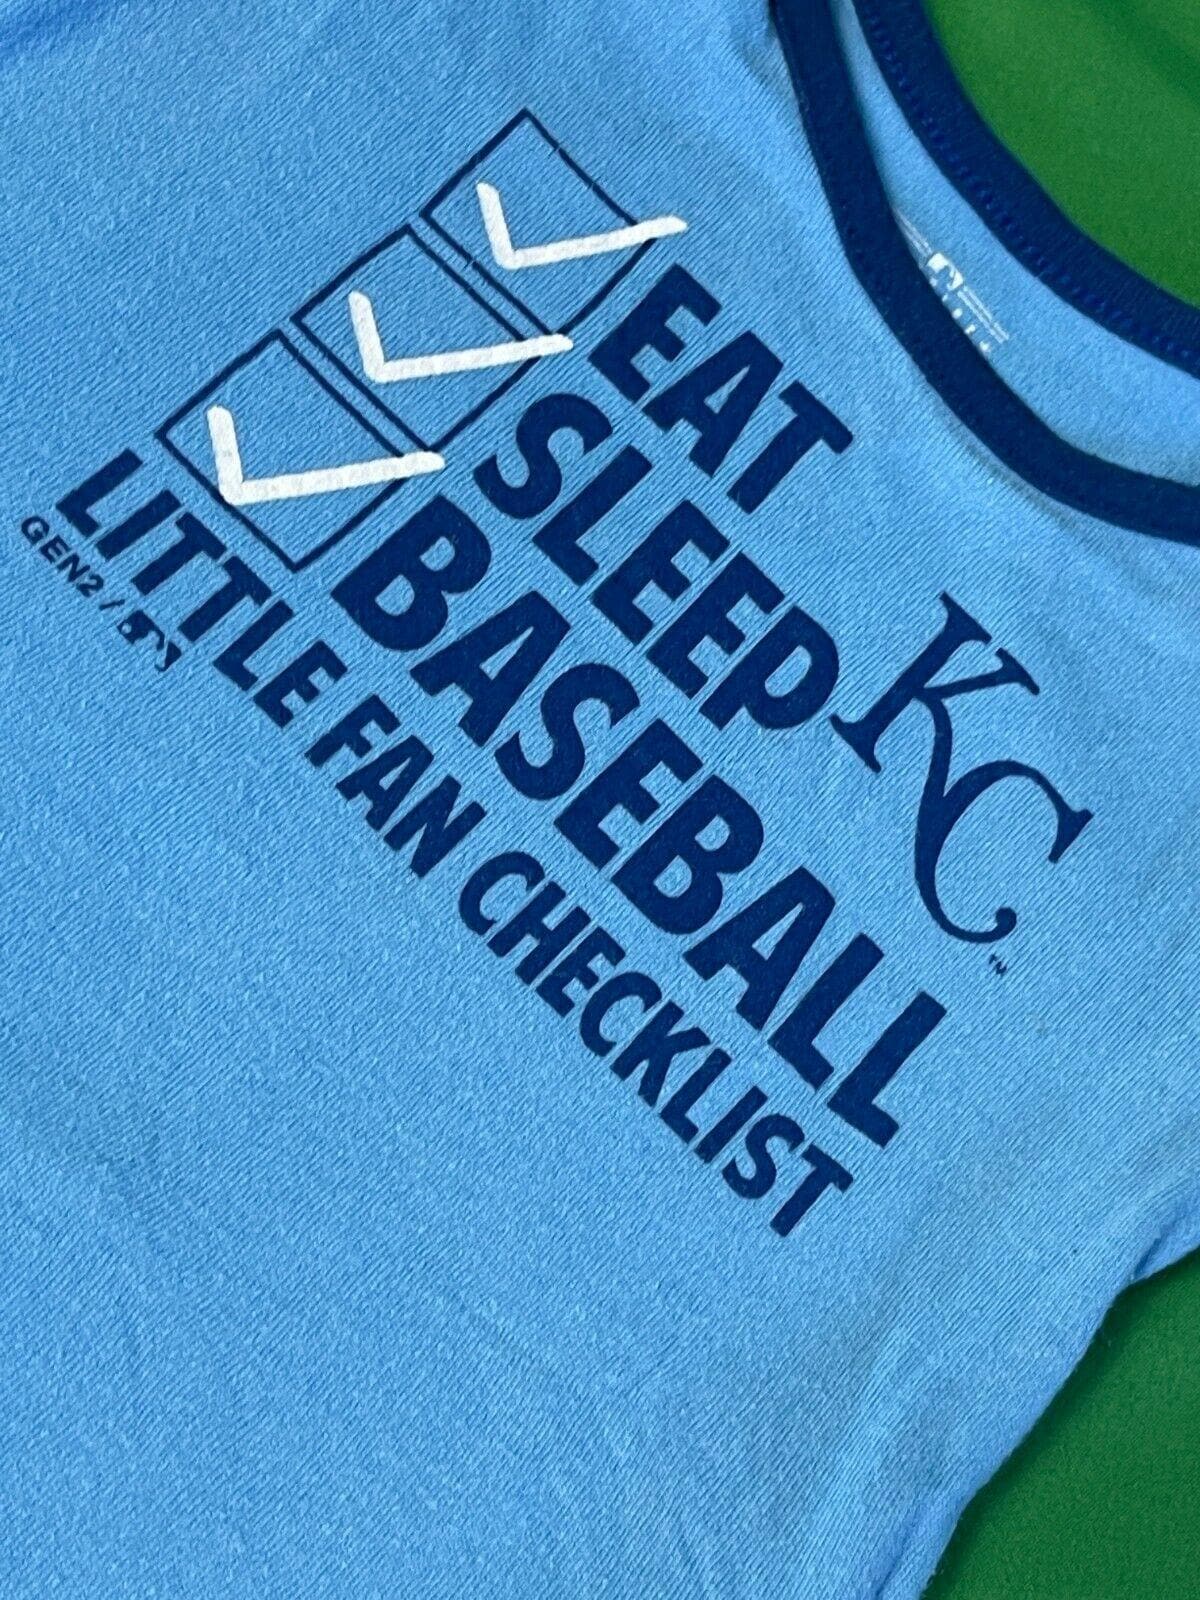 MLB Kansas City Royals "Eat Sleep Baseball" Bodysuit/Vest 24 Months